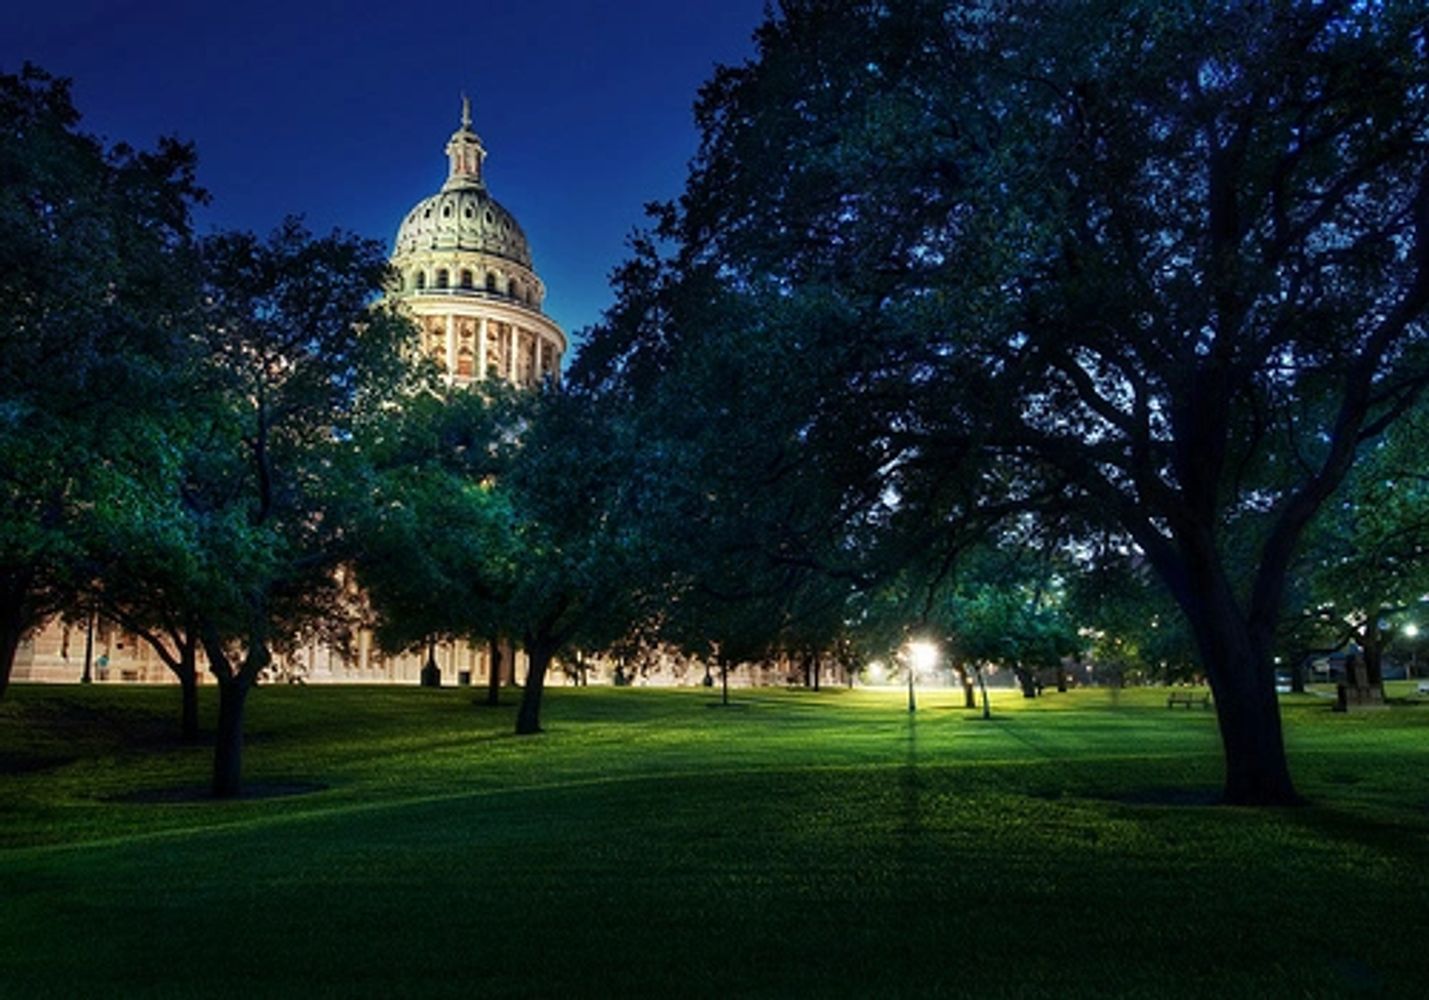 The Texas capitol at dusk. From Trey Ratcliff, www.StuckInCustoms.com
